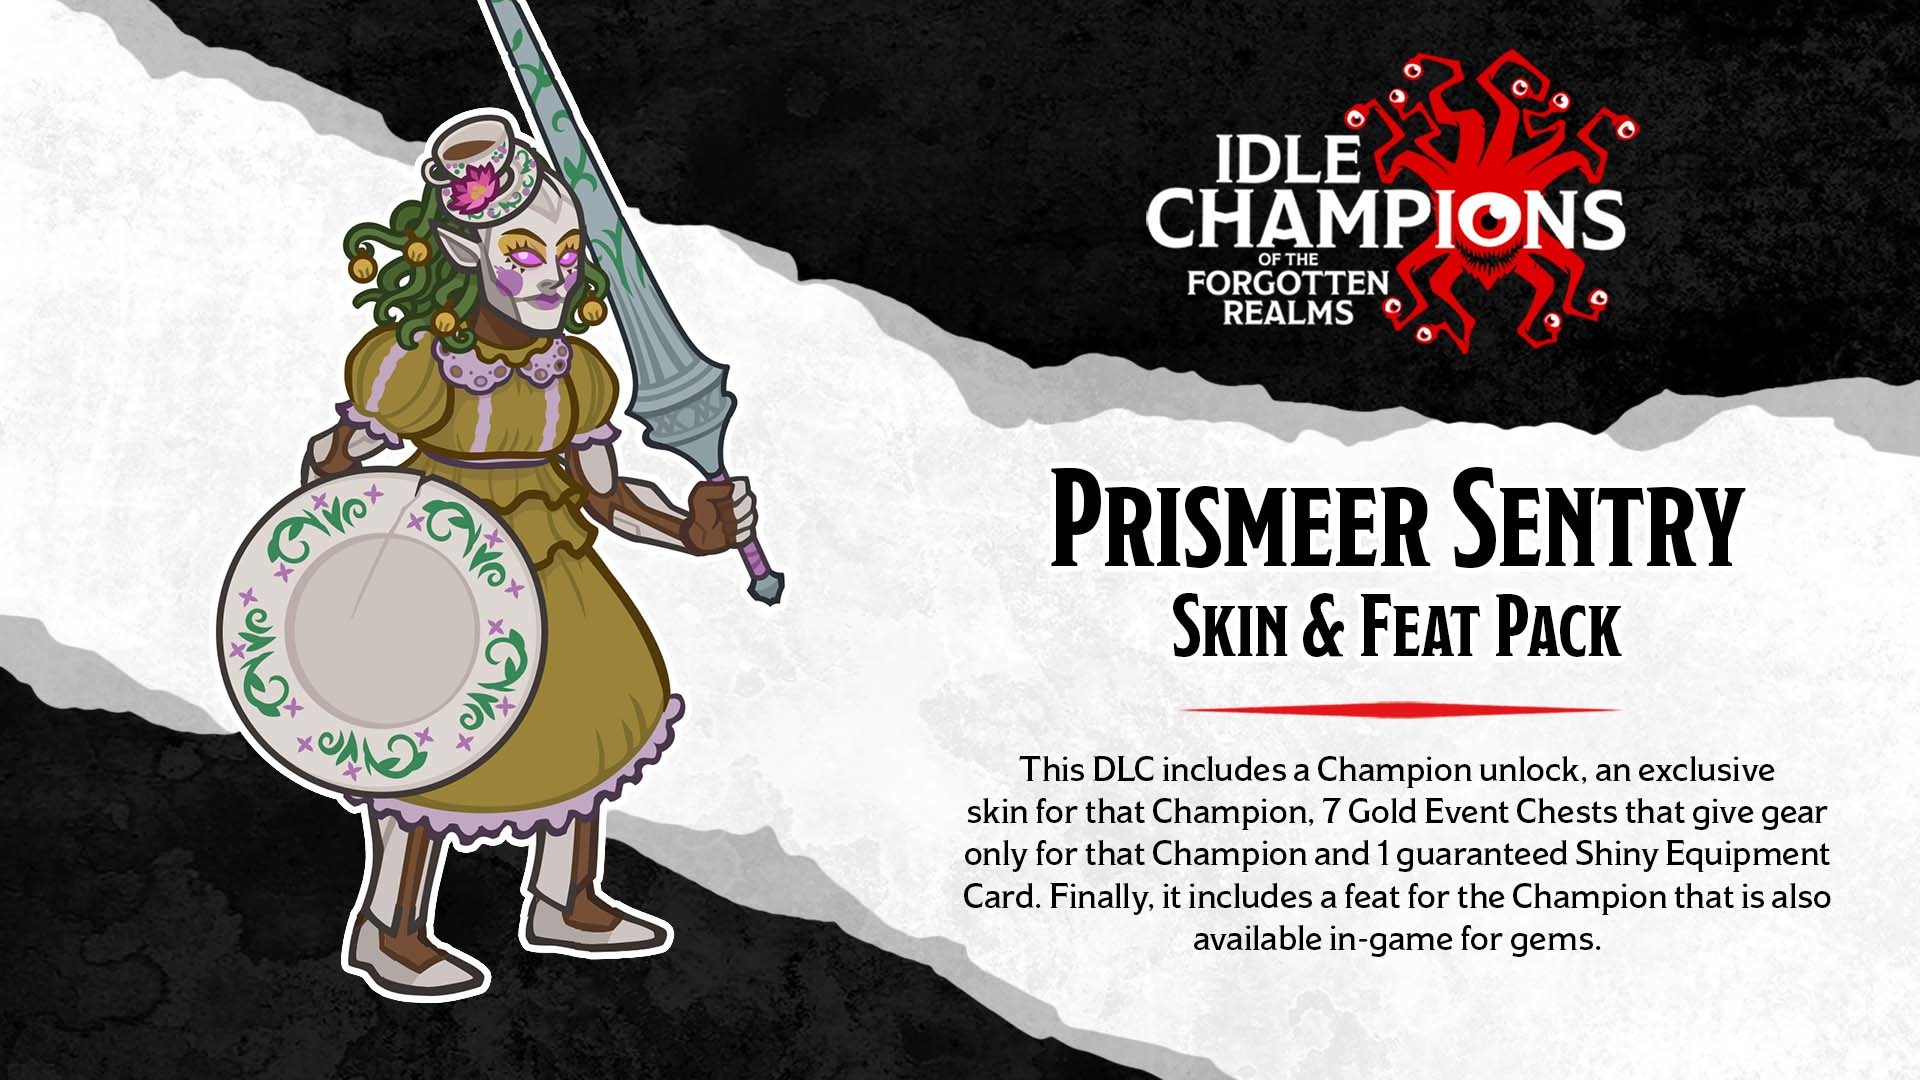 Idle Champions - Prismeer Sentry Skin & Feat Pack DLC Steam CD Key 1.05 $